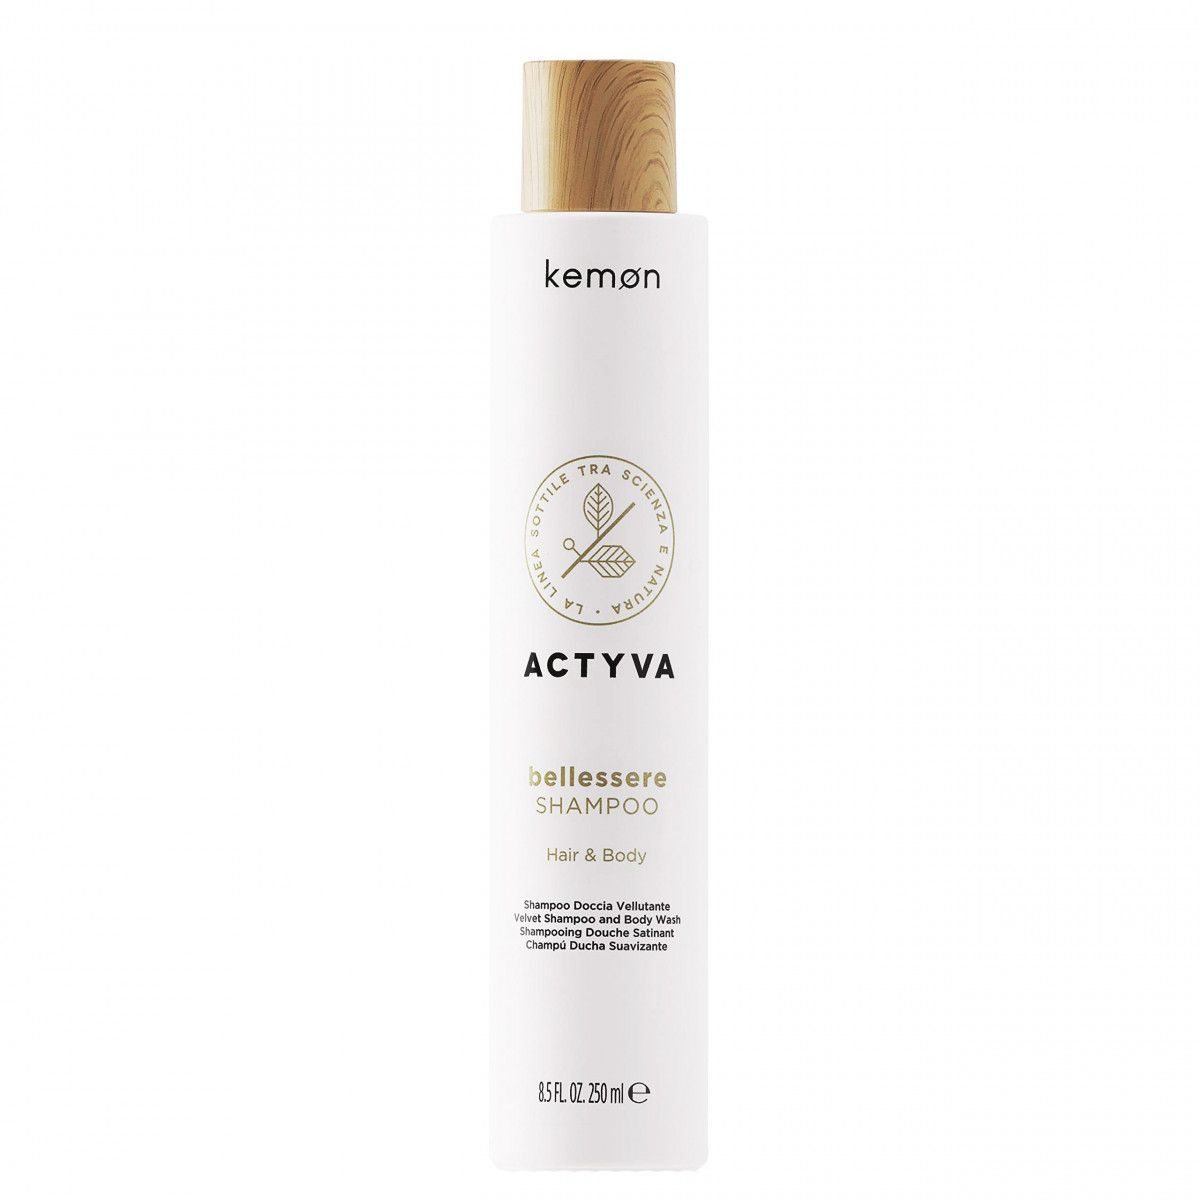 Kemon ACTYVA Bellessere, 2 w 1 szampon i żel pod prysznic 250ml